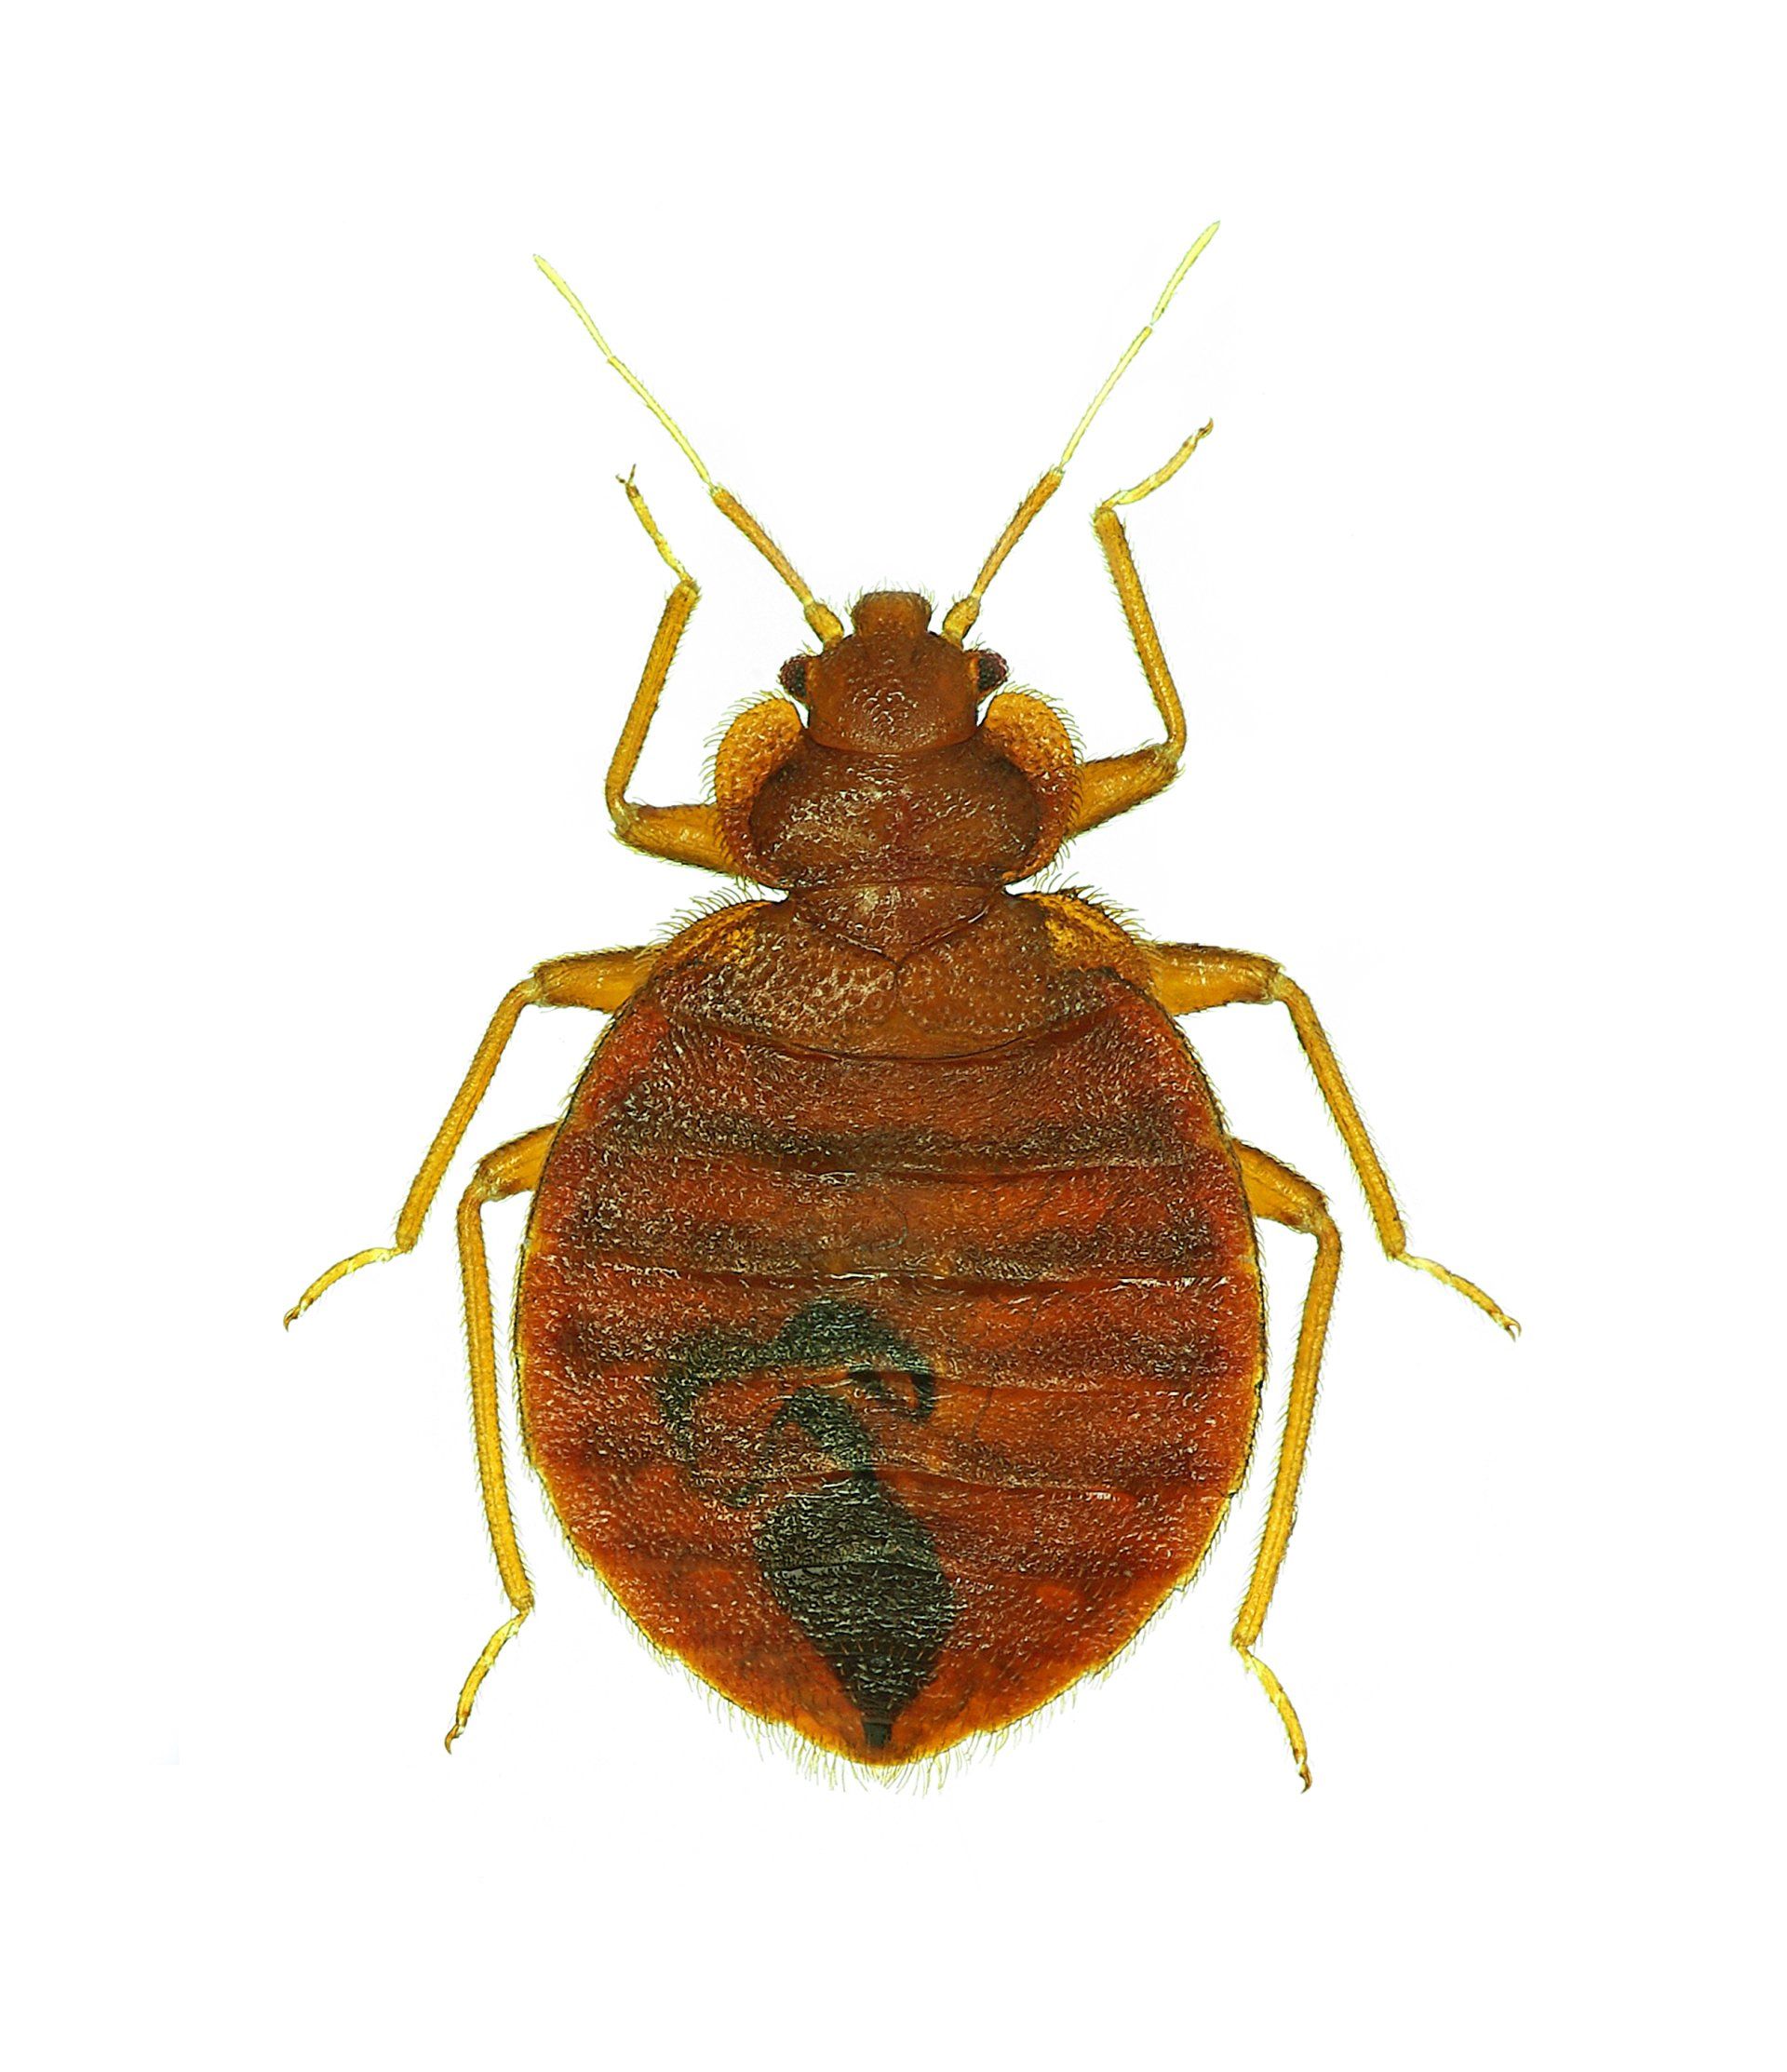 Adult bed bug